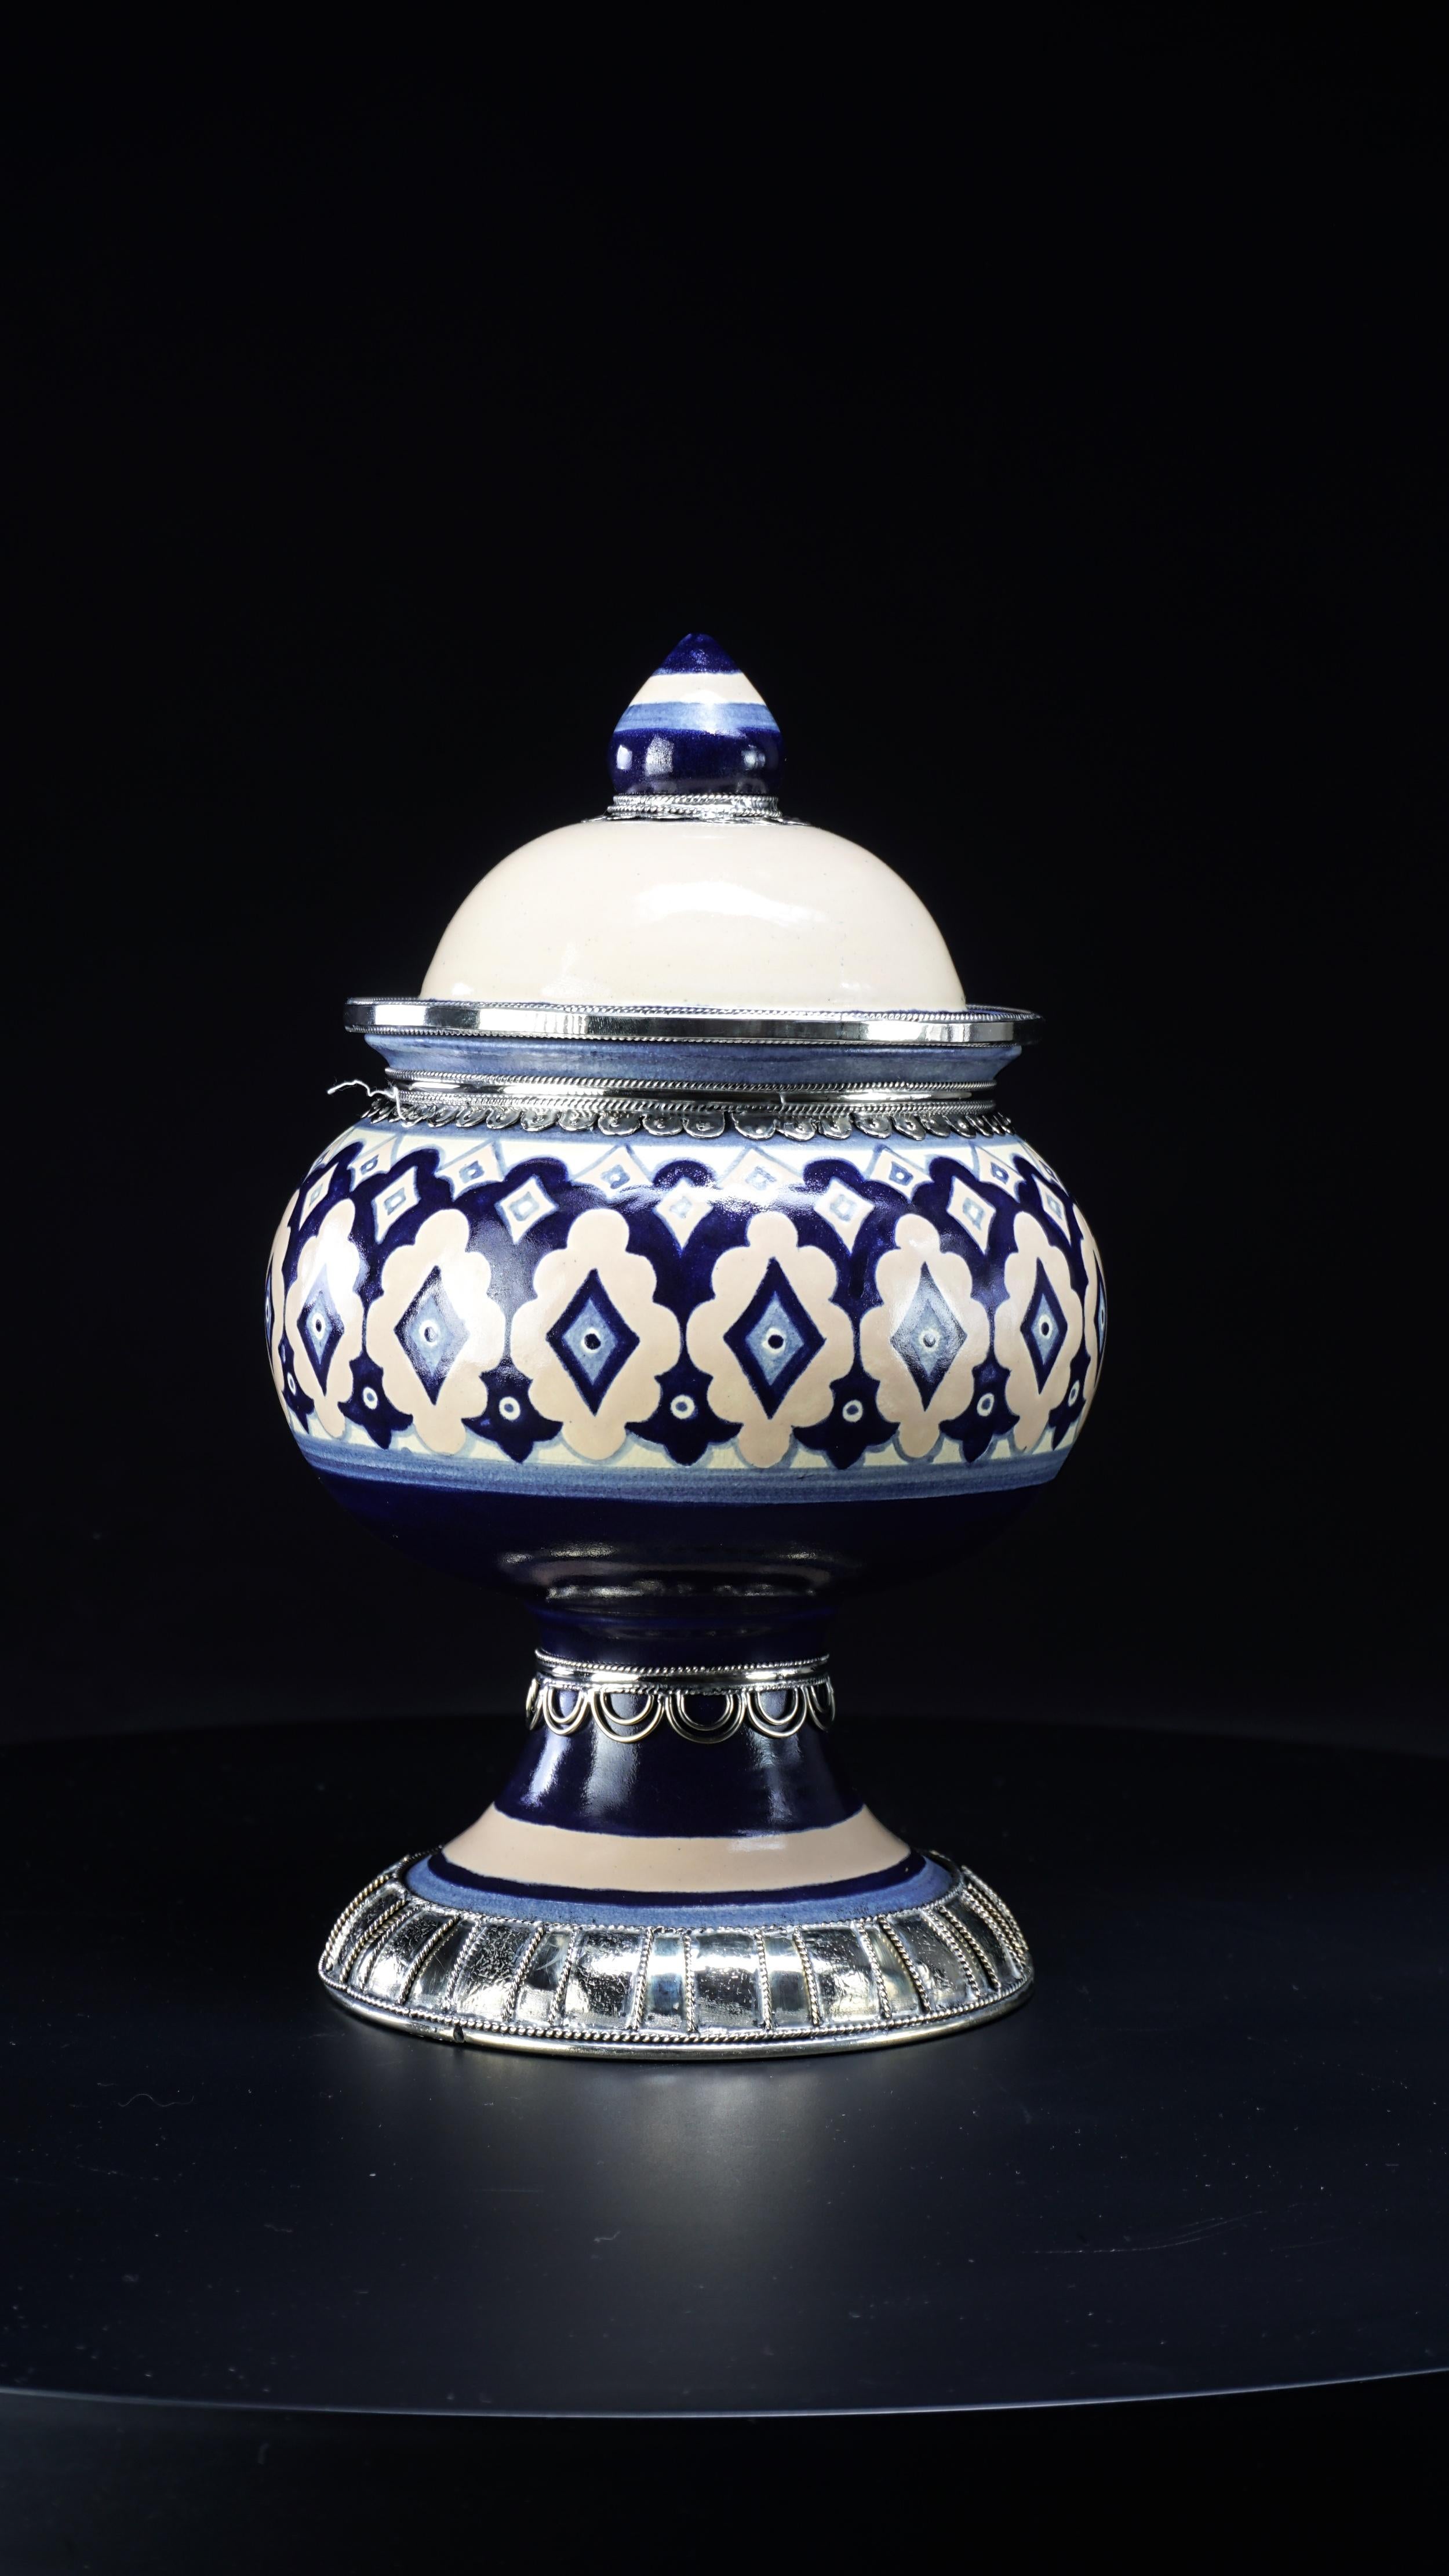 Other Blue and White Jar, Ceramic and White Metal ‘Alpaca’, Handmade with Cherubs